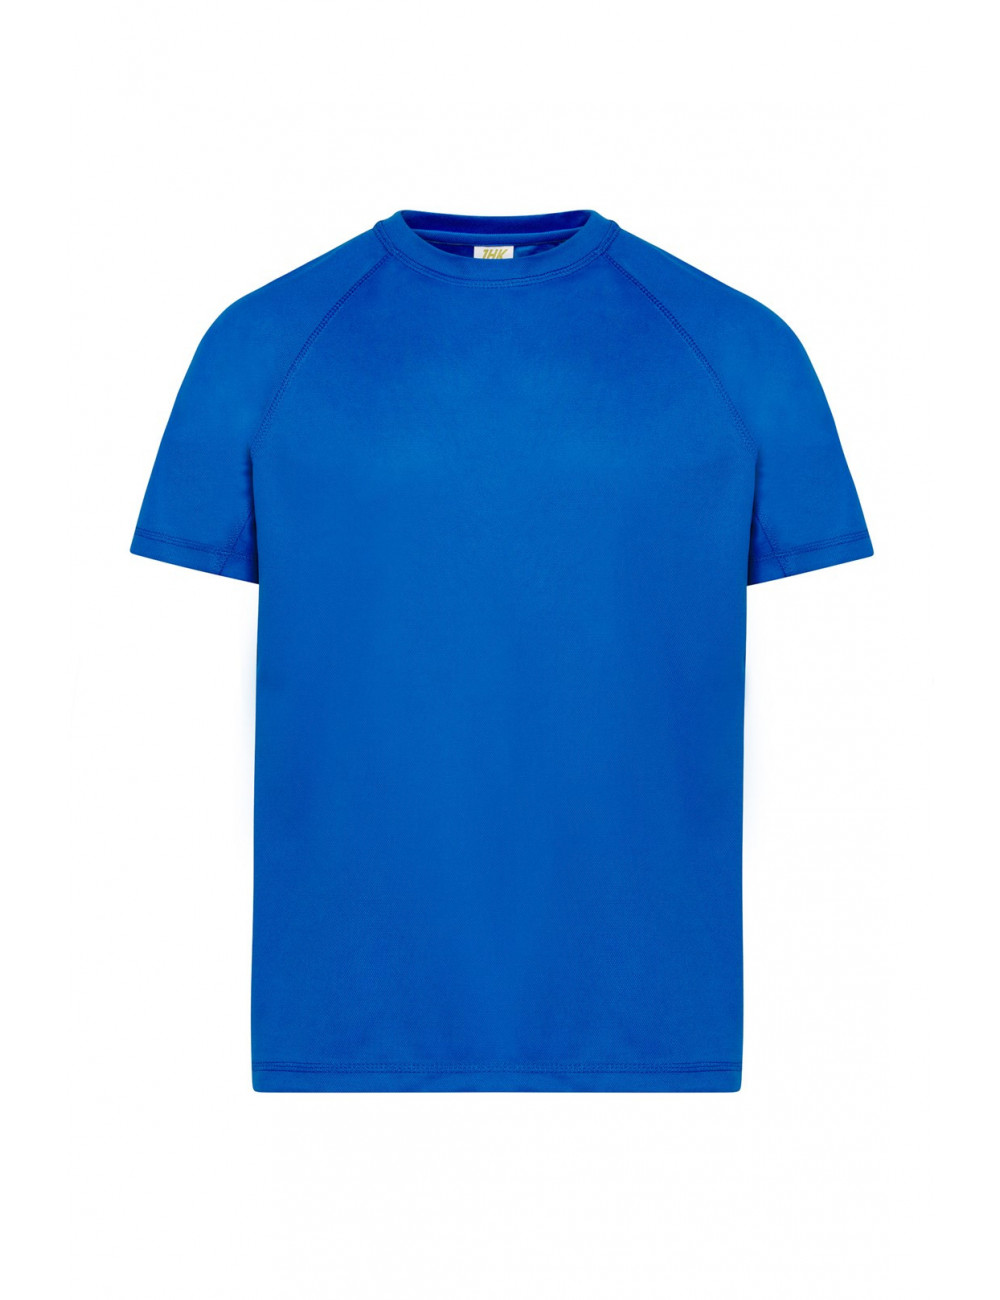 T-shirt sport kid royal blue Jhk